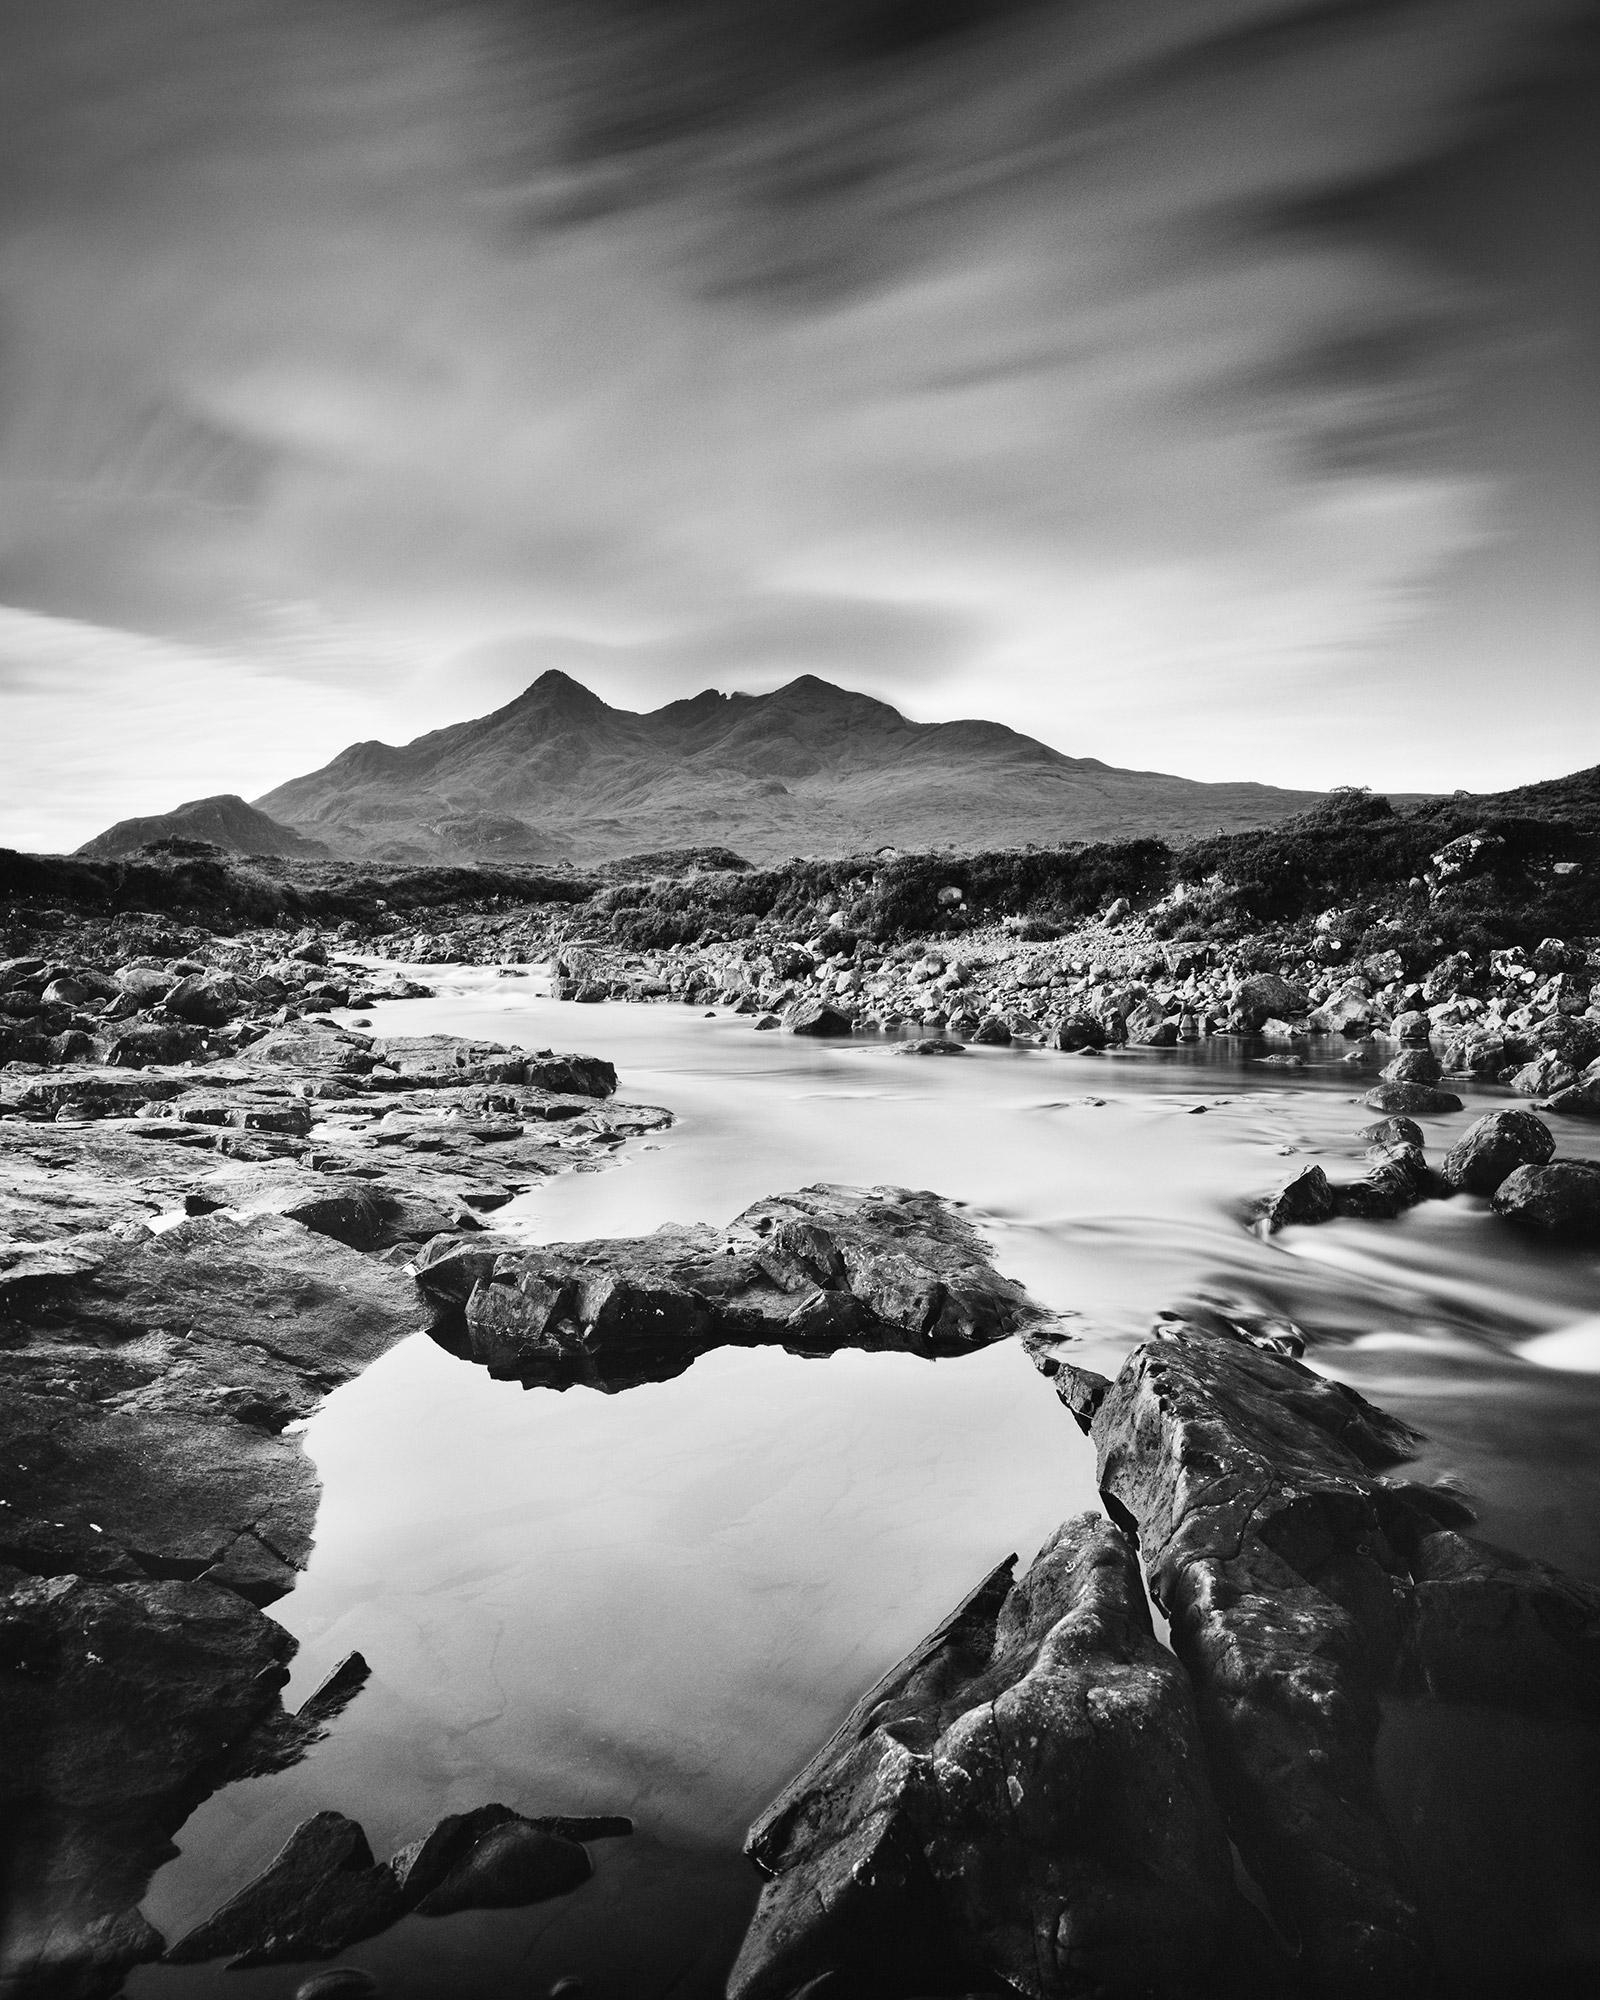 Landscape Photograph Gerald Berghammer - Black Cuillin Hills Mountains Scotland black and white landscape art photography